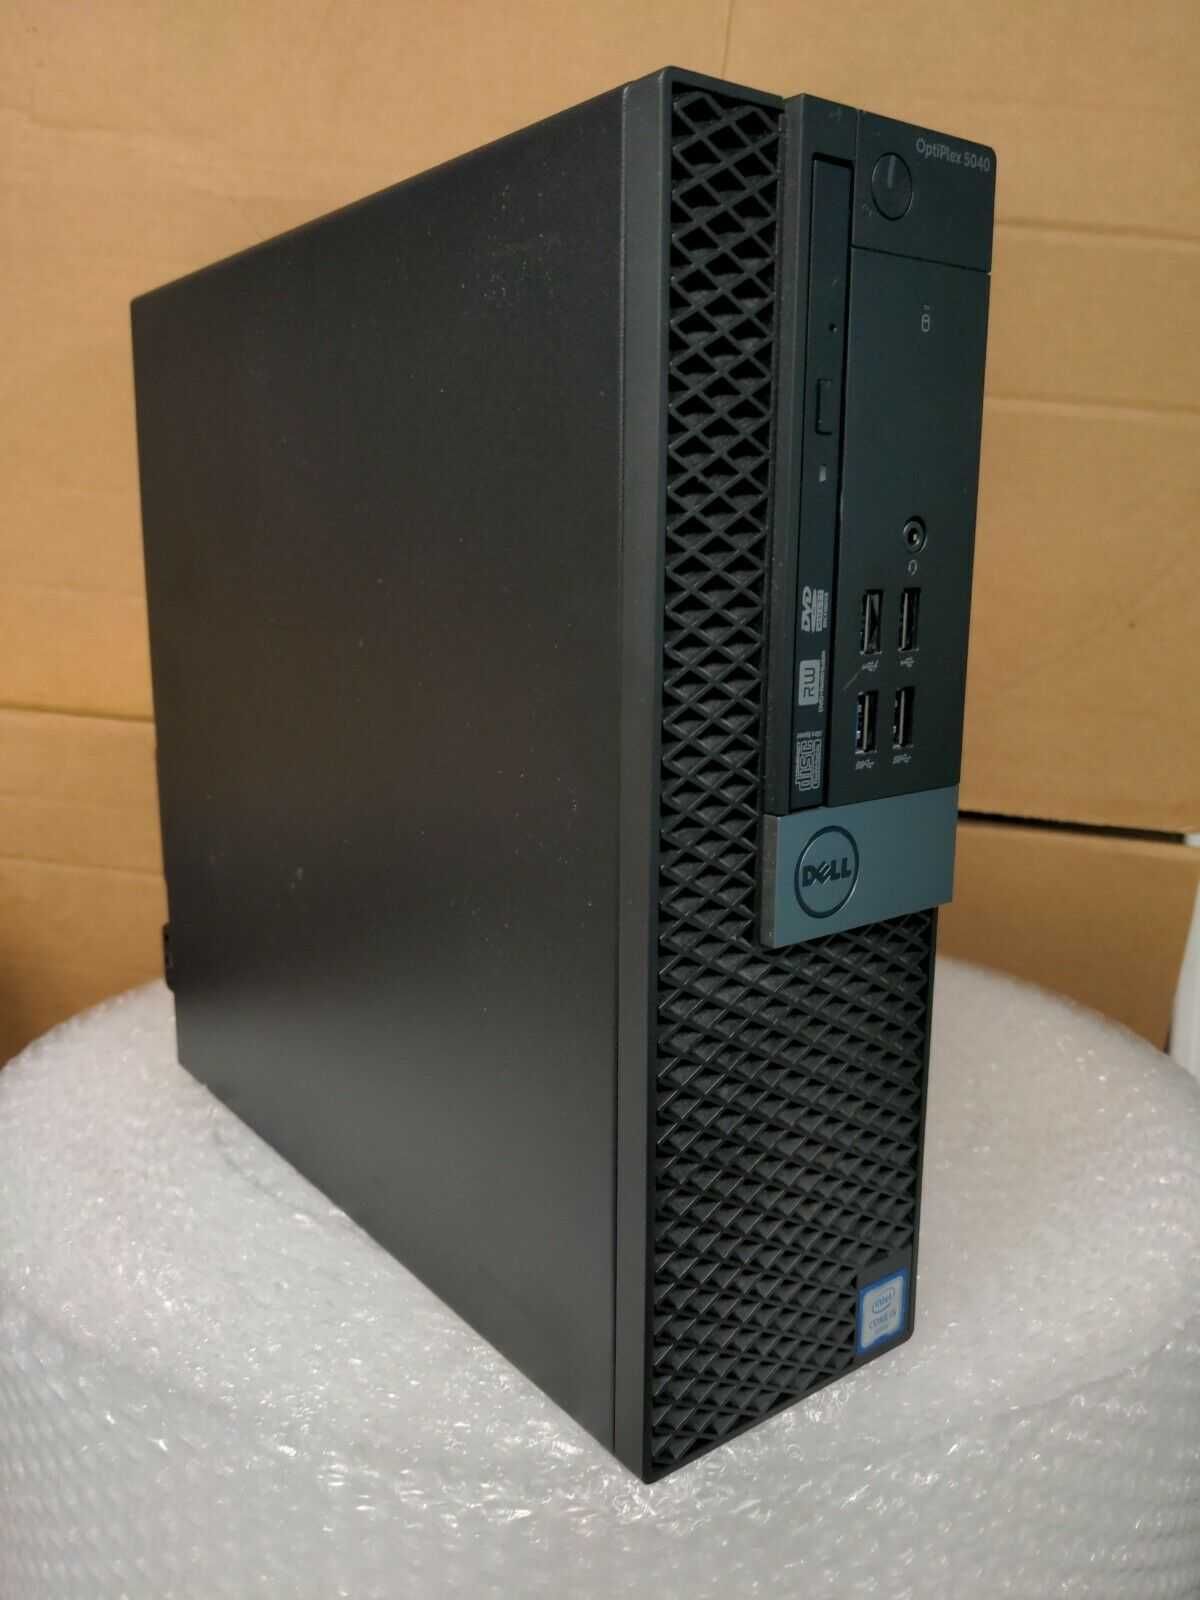 Мощный компактный Dell на i5-6500 + 16gb + ssd 240gb